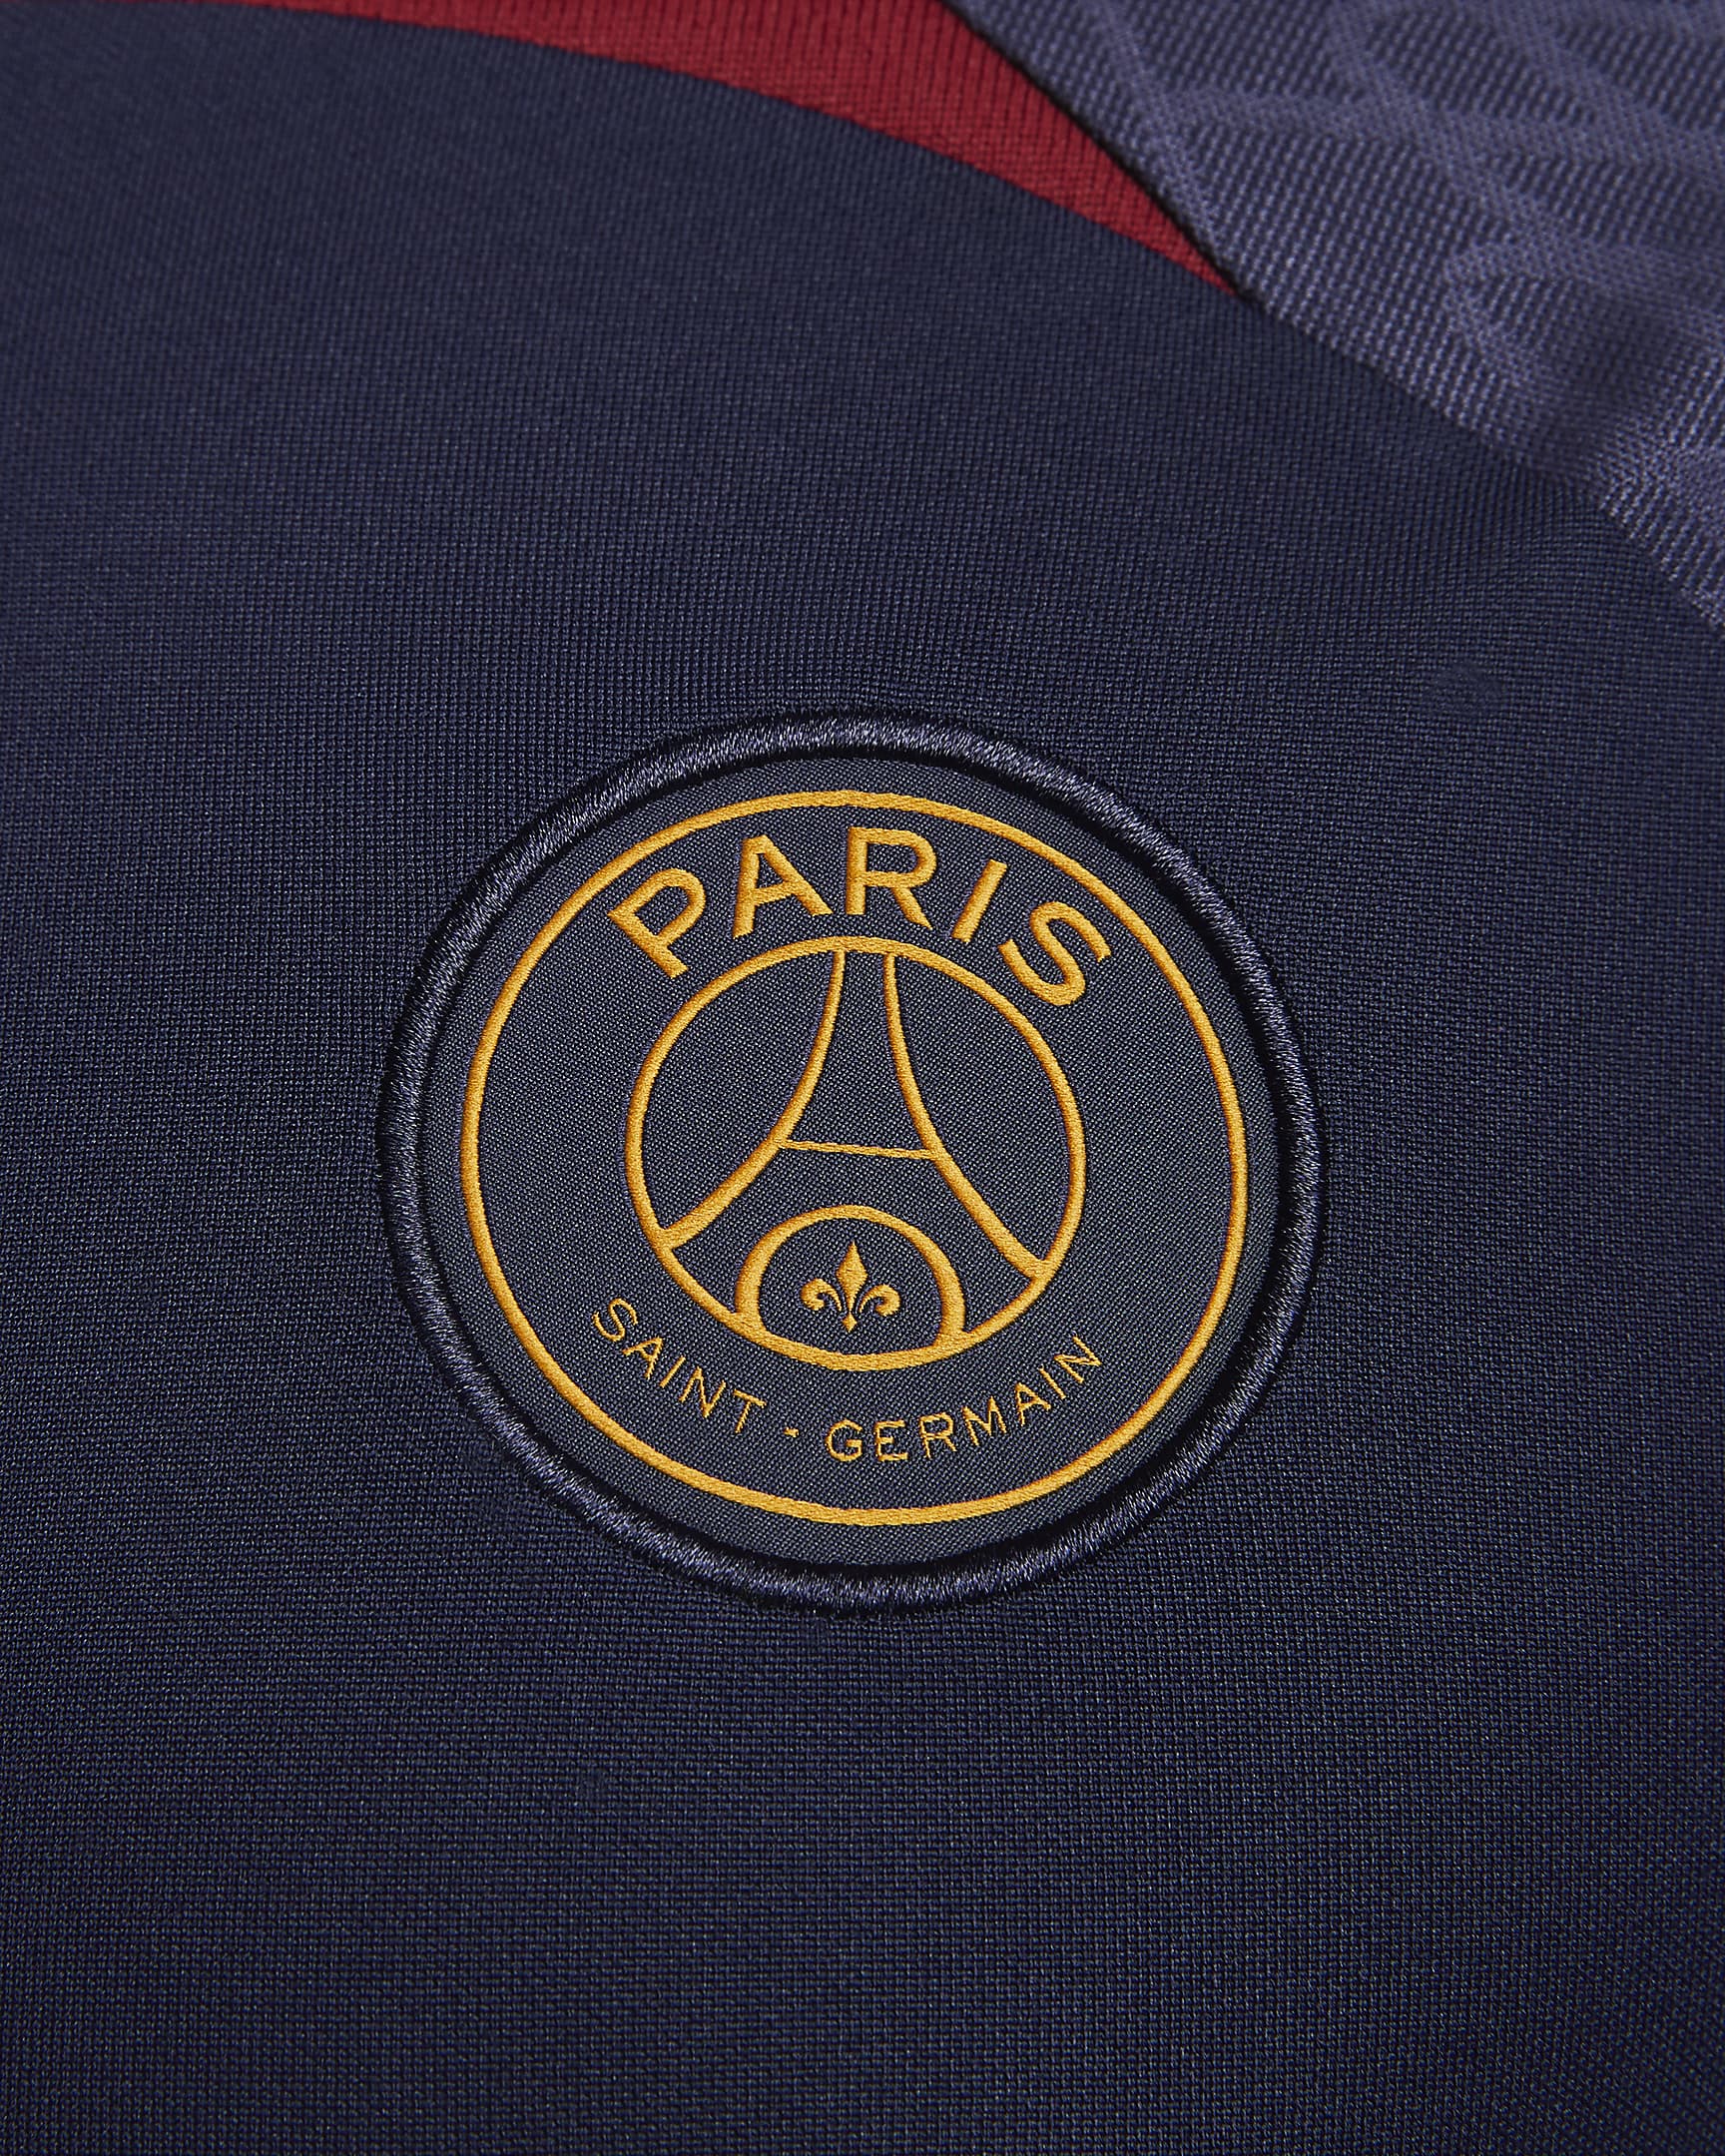 Paris Saint-Germain Strike Men's Nike Dri-FIT Knit Soccer Top - Blackened Blue/Blackened Blue/Team Red/Gold Suede